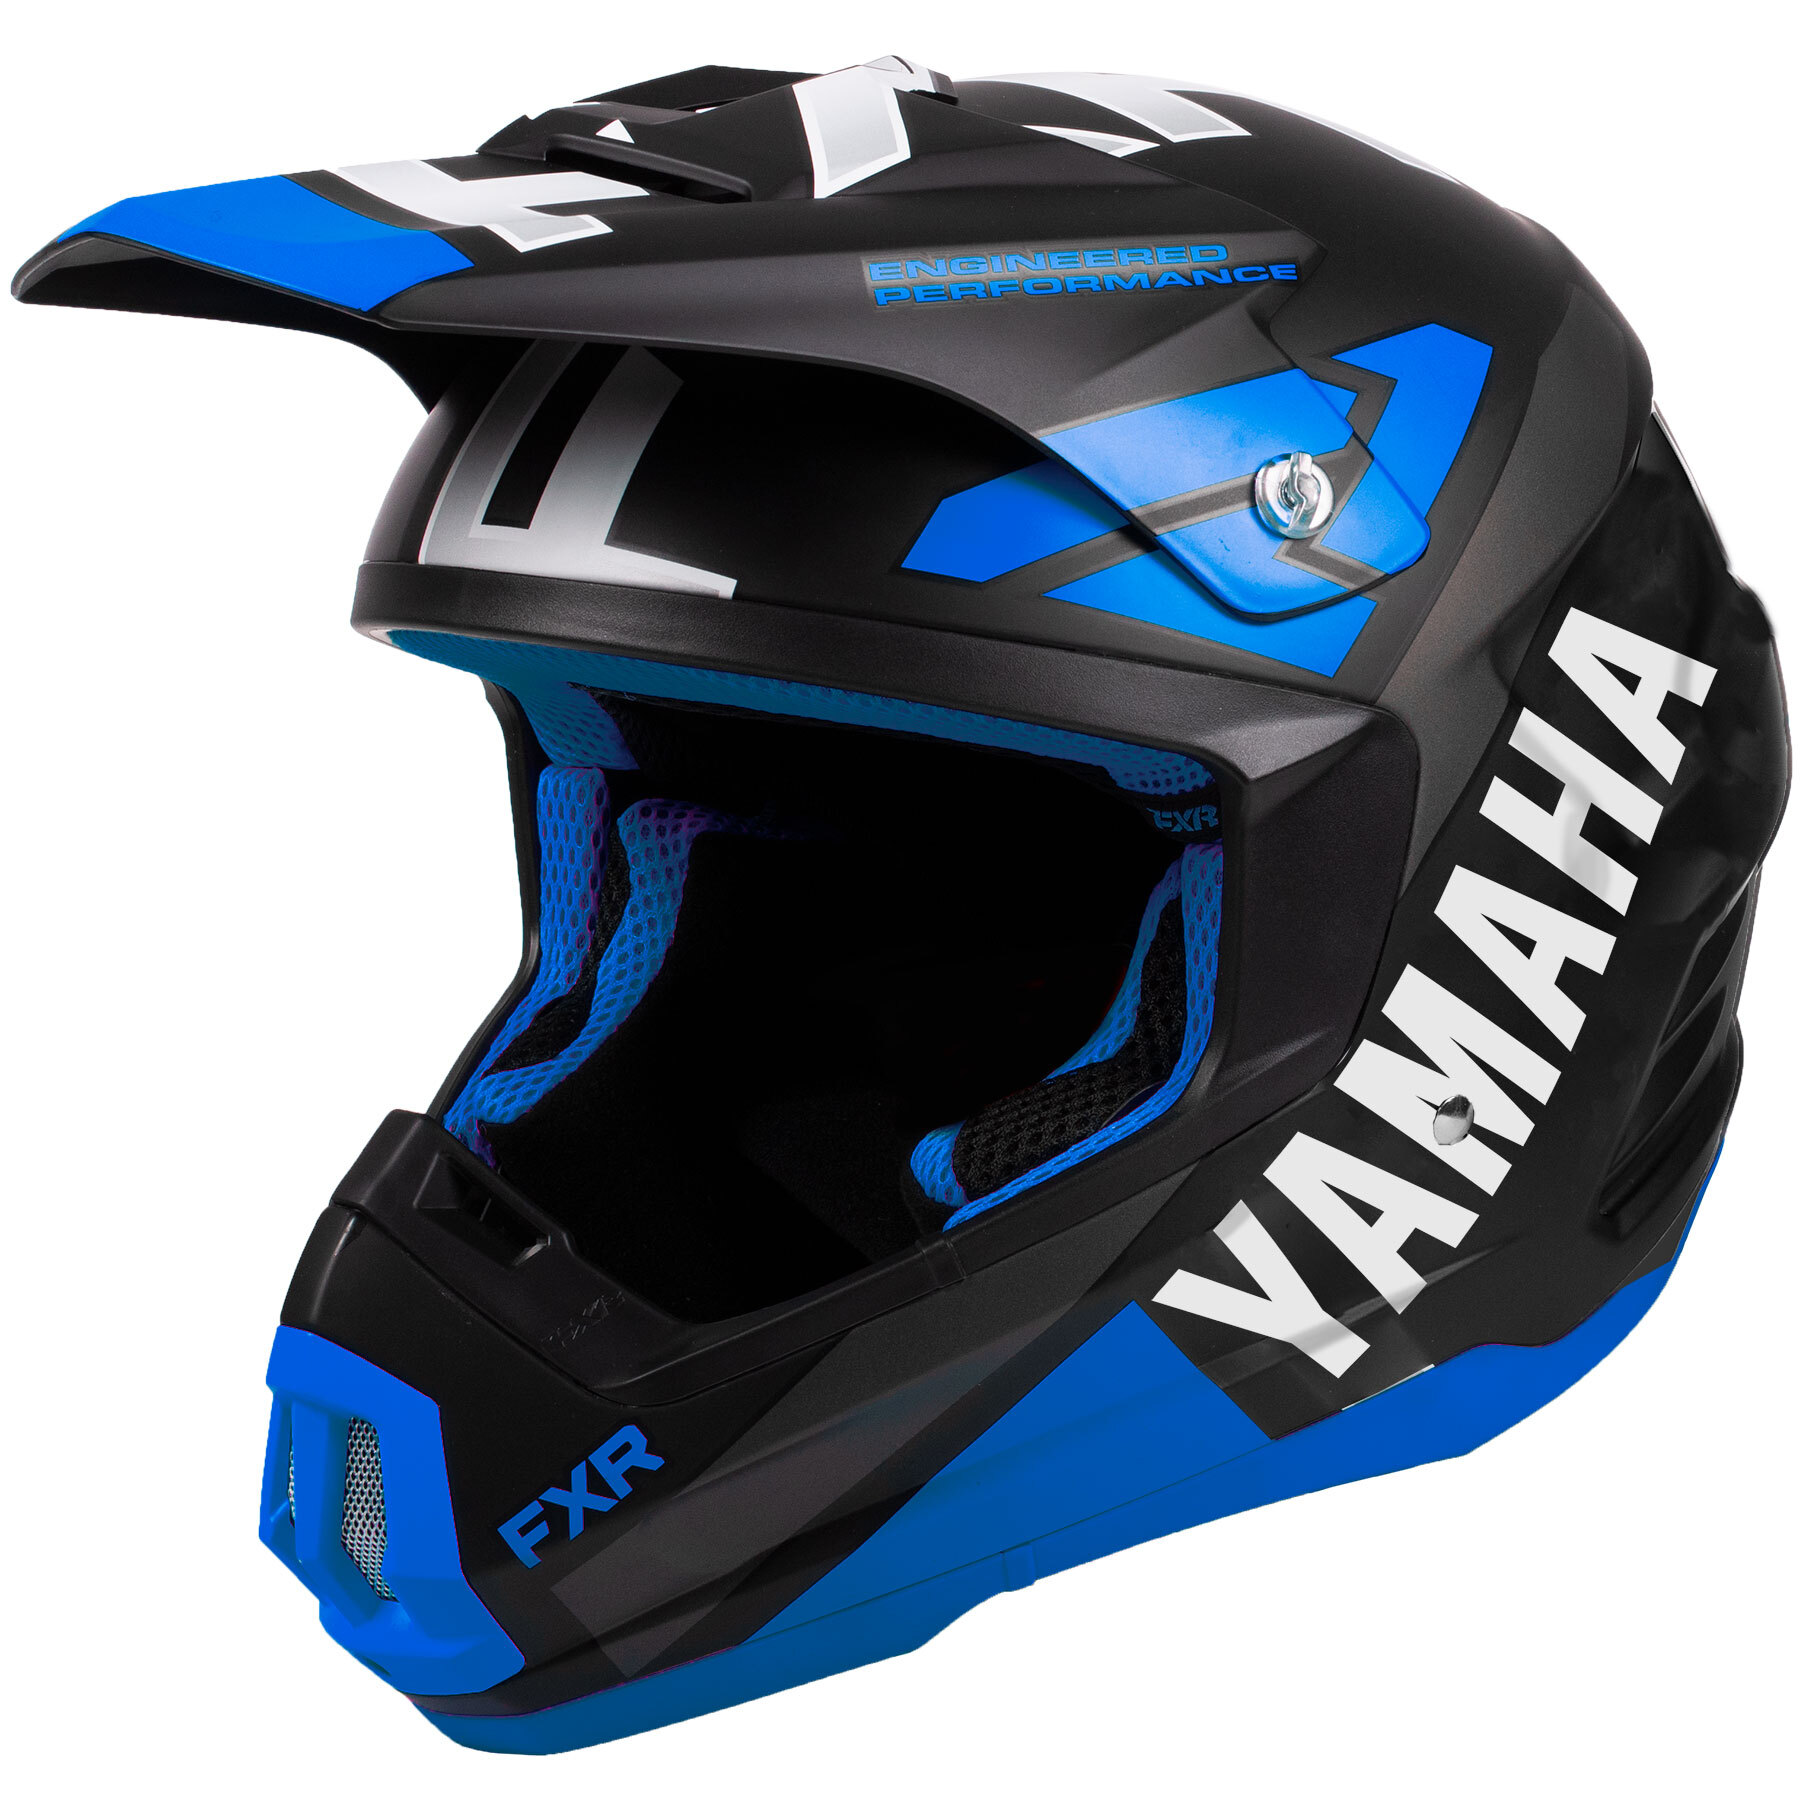 Yamaha Torque Team Helmet by FXR® Extra Large blue/black/white